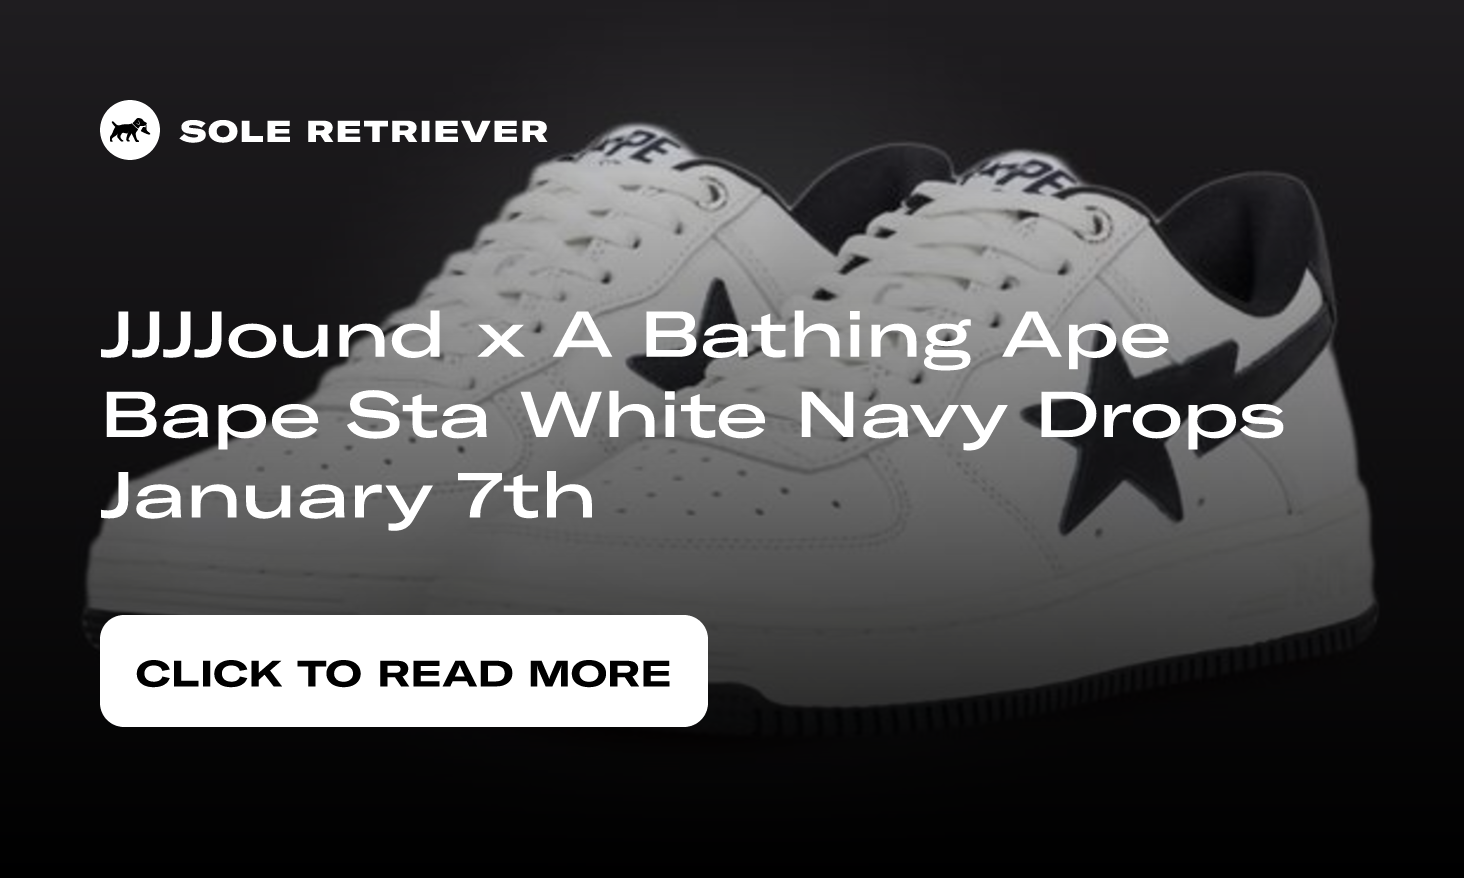 JJJJound x A Bathing Ape Bape Sta White Navy Drops January 7th